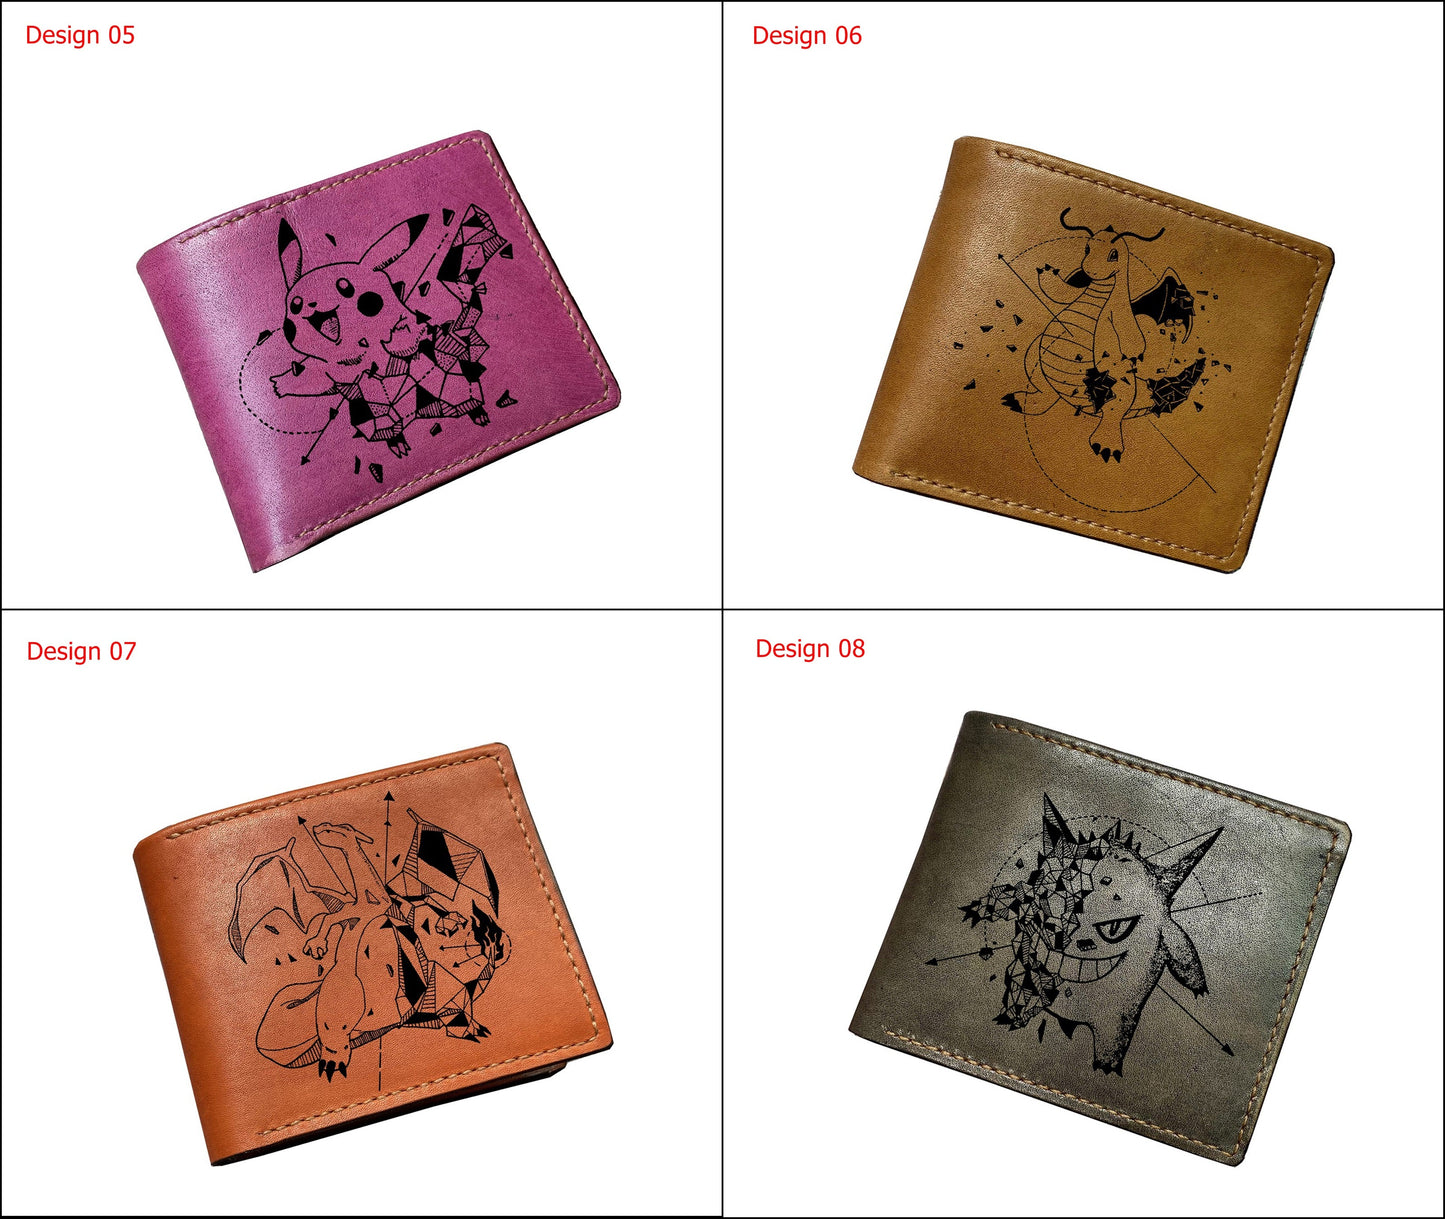 Mayan Corner - Pokemon geometric art leather handmade wallet, leather gift for dad, husband, brother - Venusaur/Fushigibana